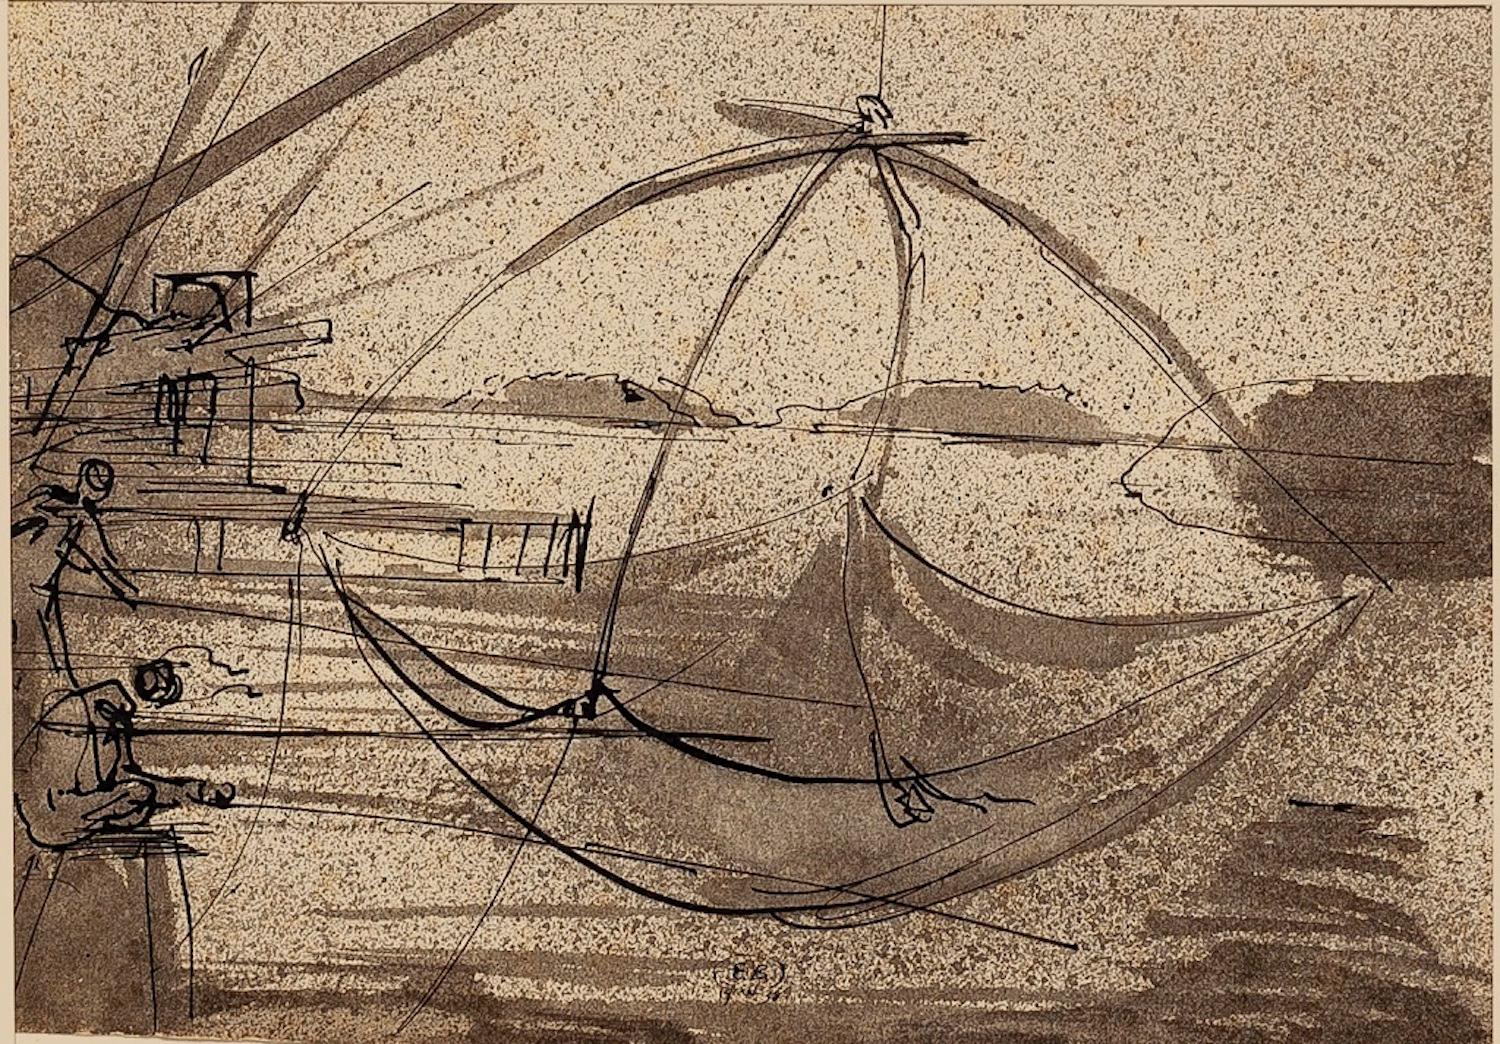 Eugene Berman Abstract Drawing – Fishing - Original China-Tintezeichnung von E. Berman - 1938